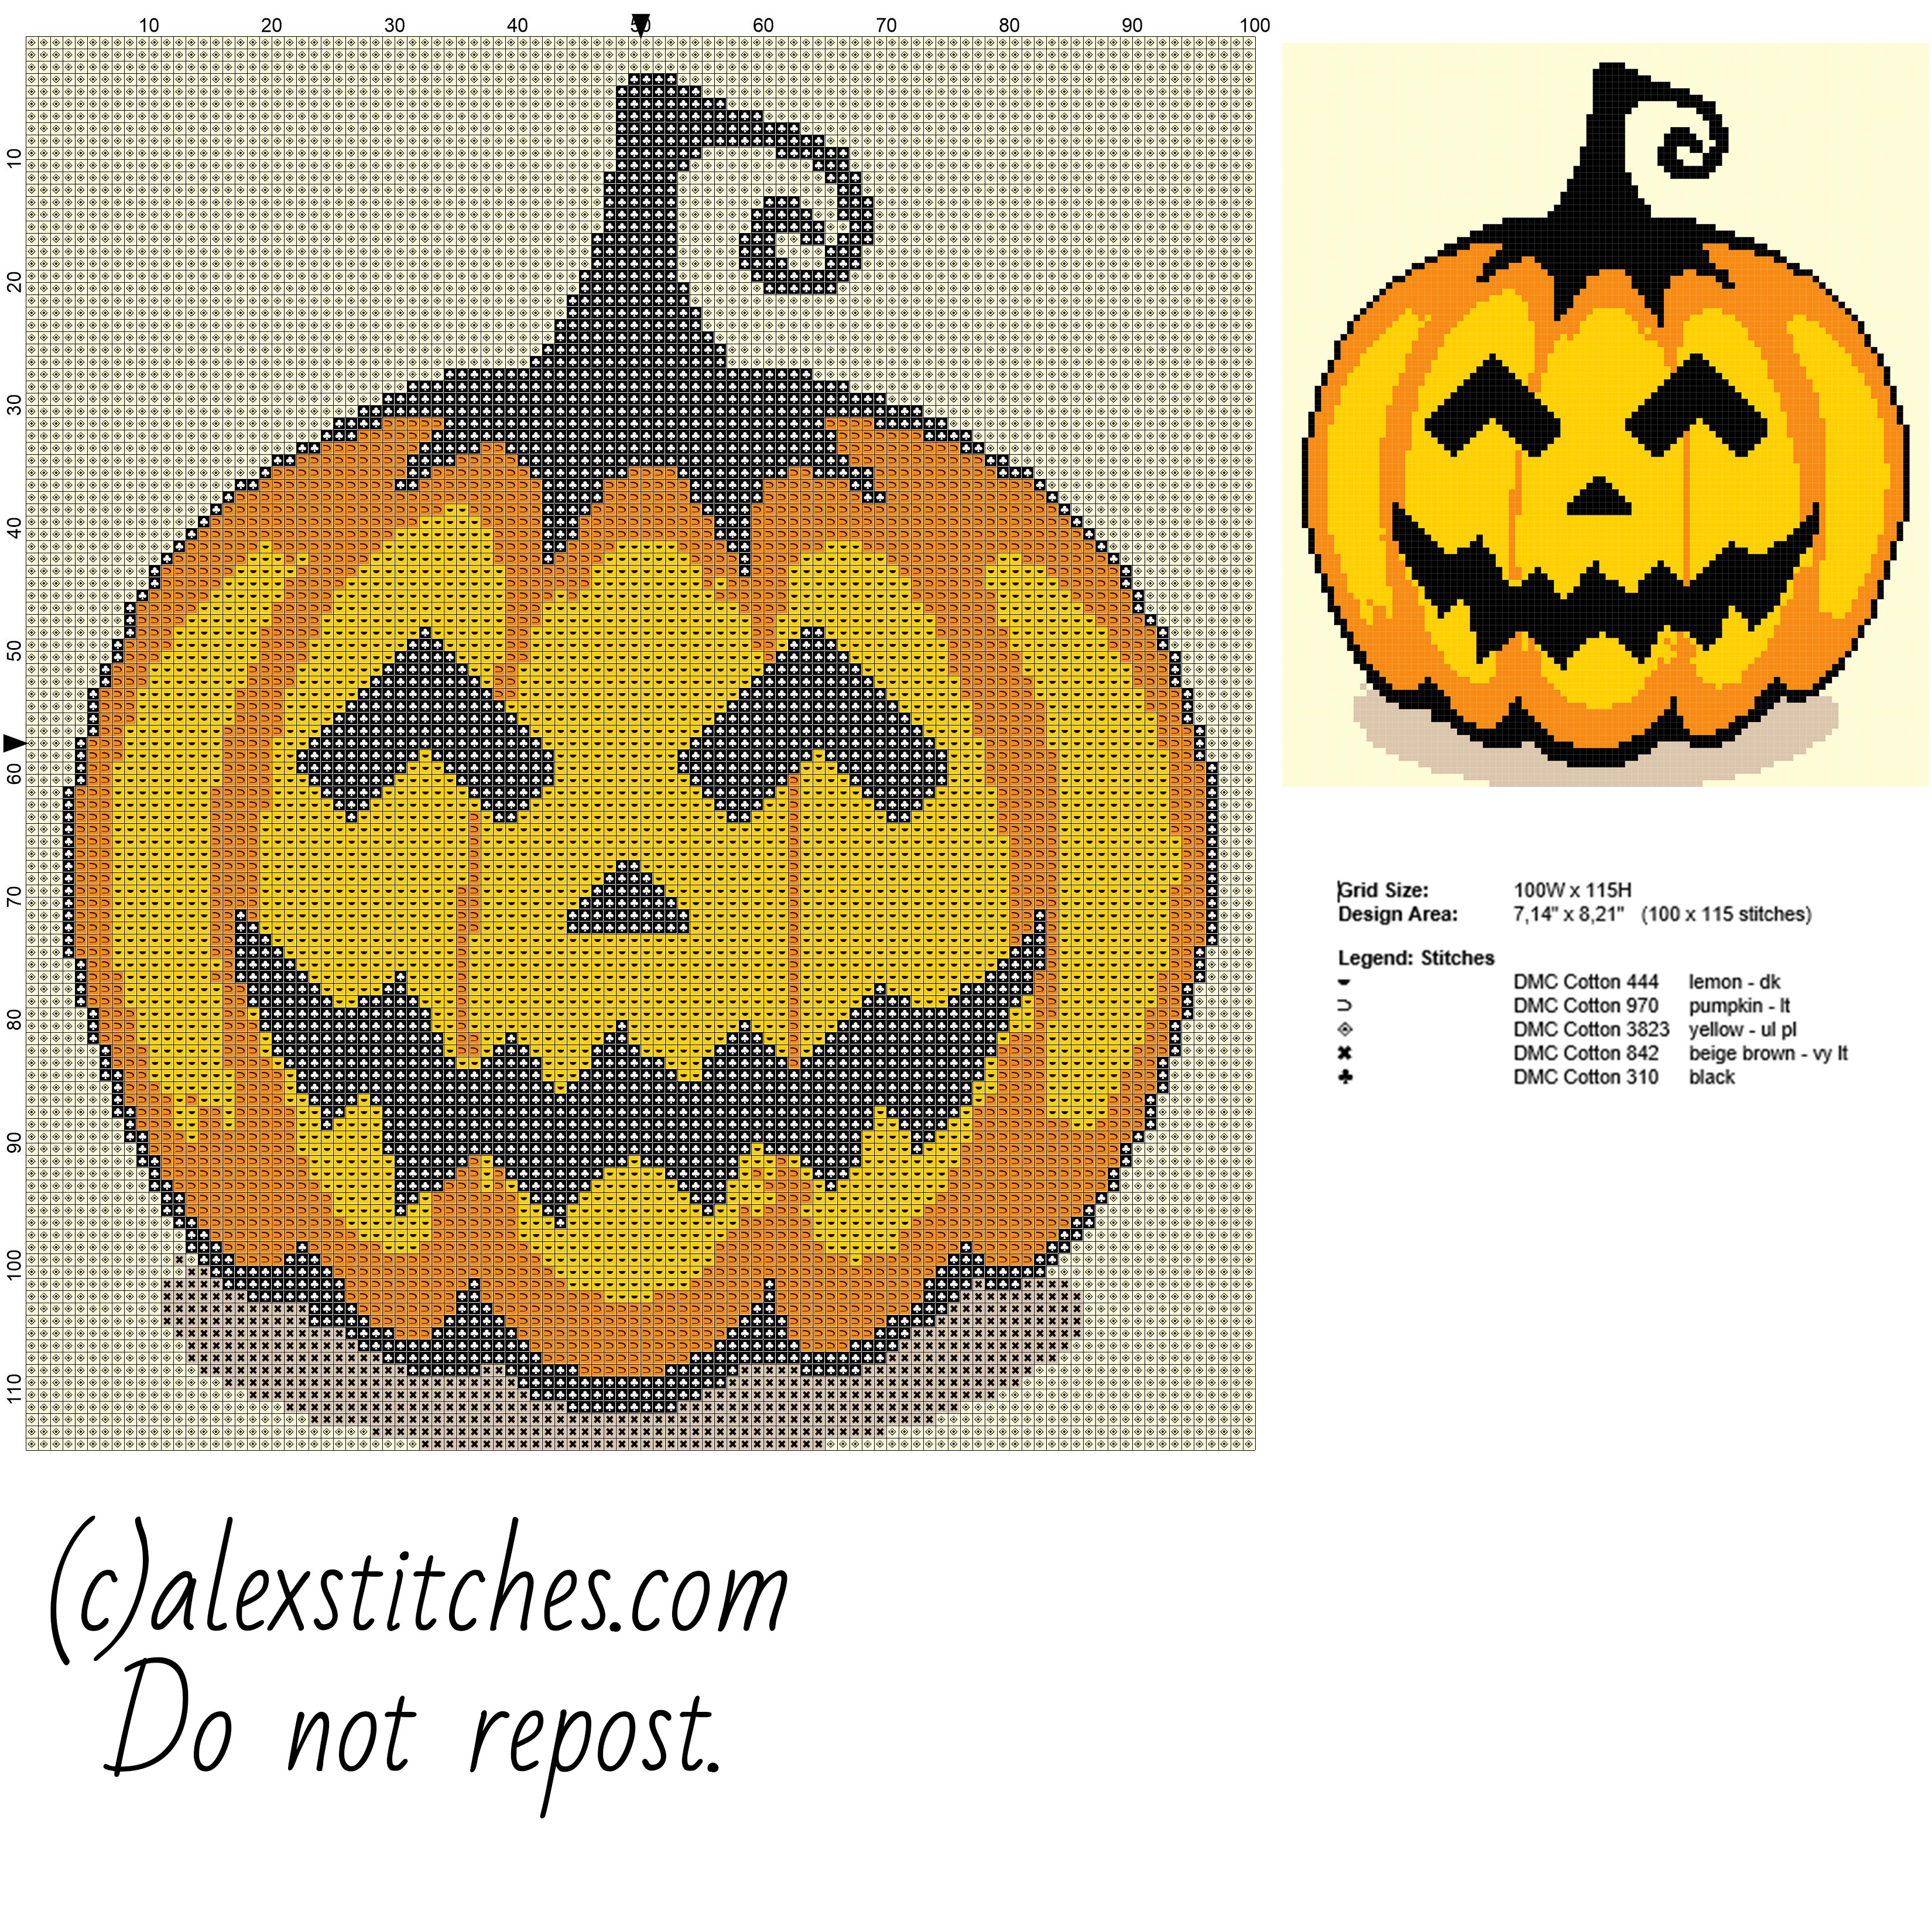 An Halloween pumpkin size about 100 x 100 stitches free cross stitch pattern